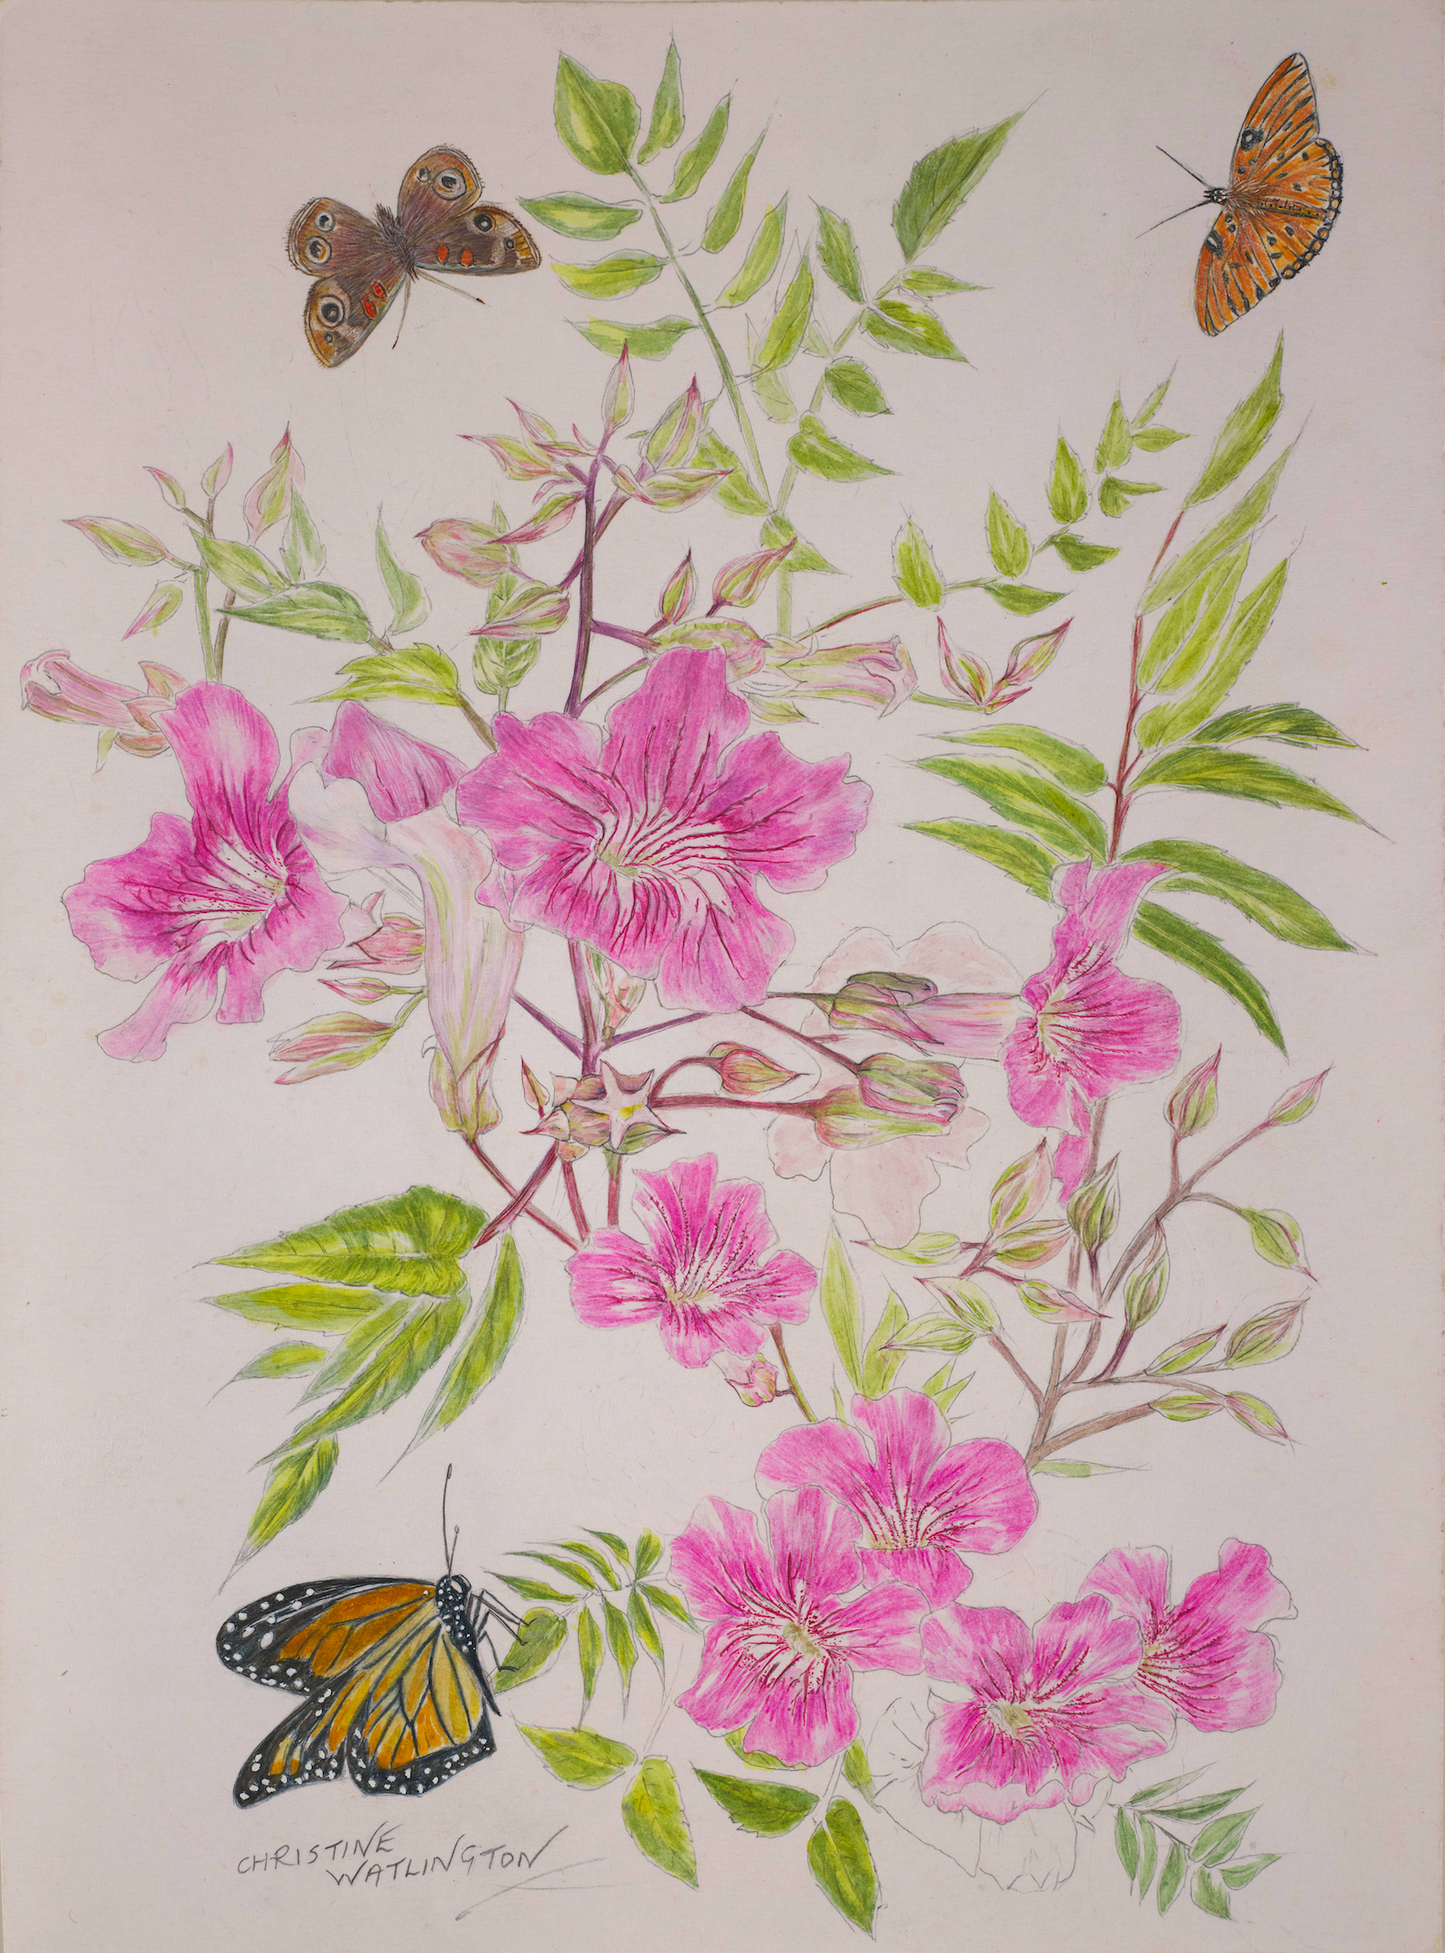 Bermuda Butterflies Enjoying the Pink Trumpet Vine